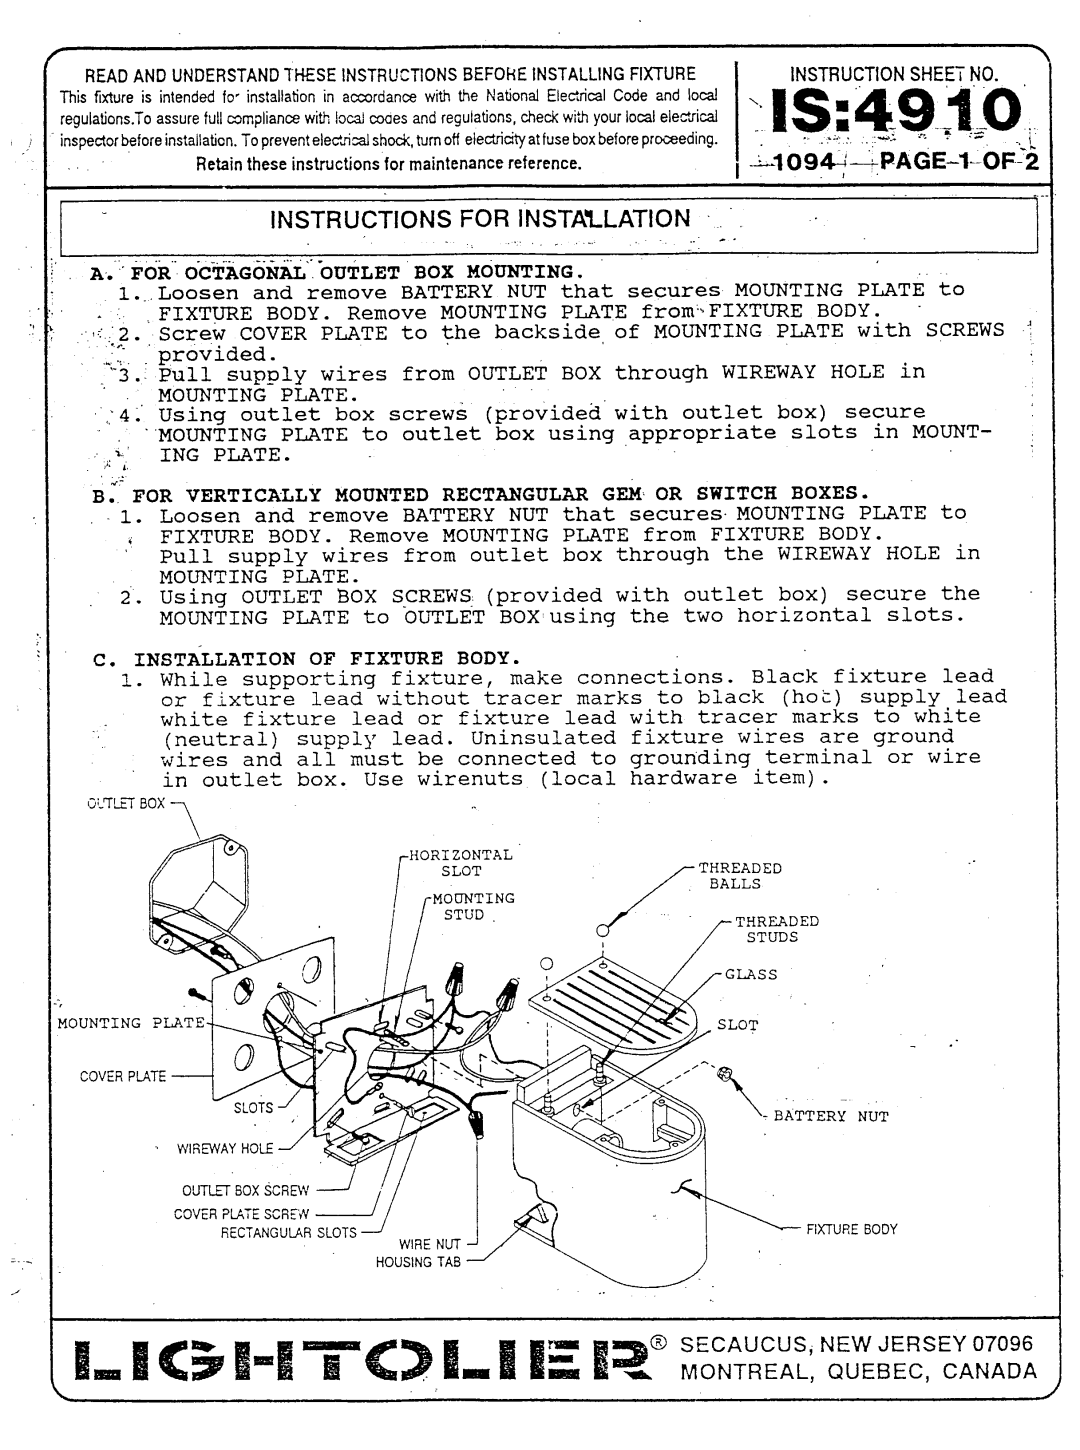 Lightolier 1094 instruction sheet ’Zr 